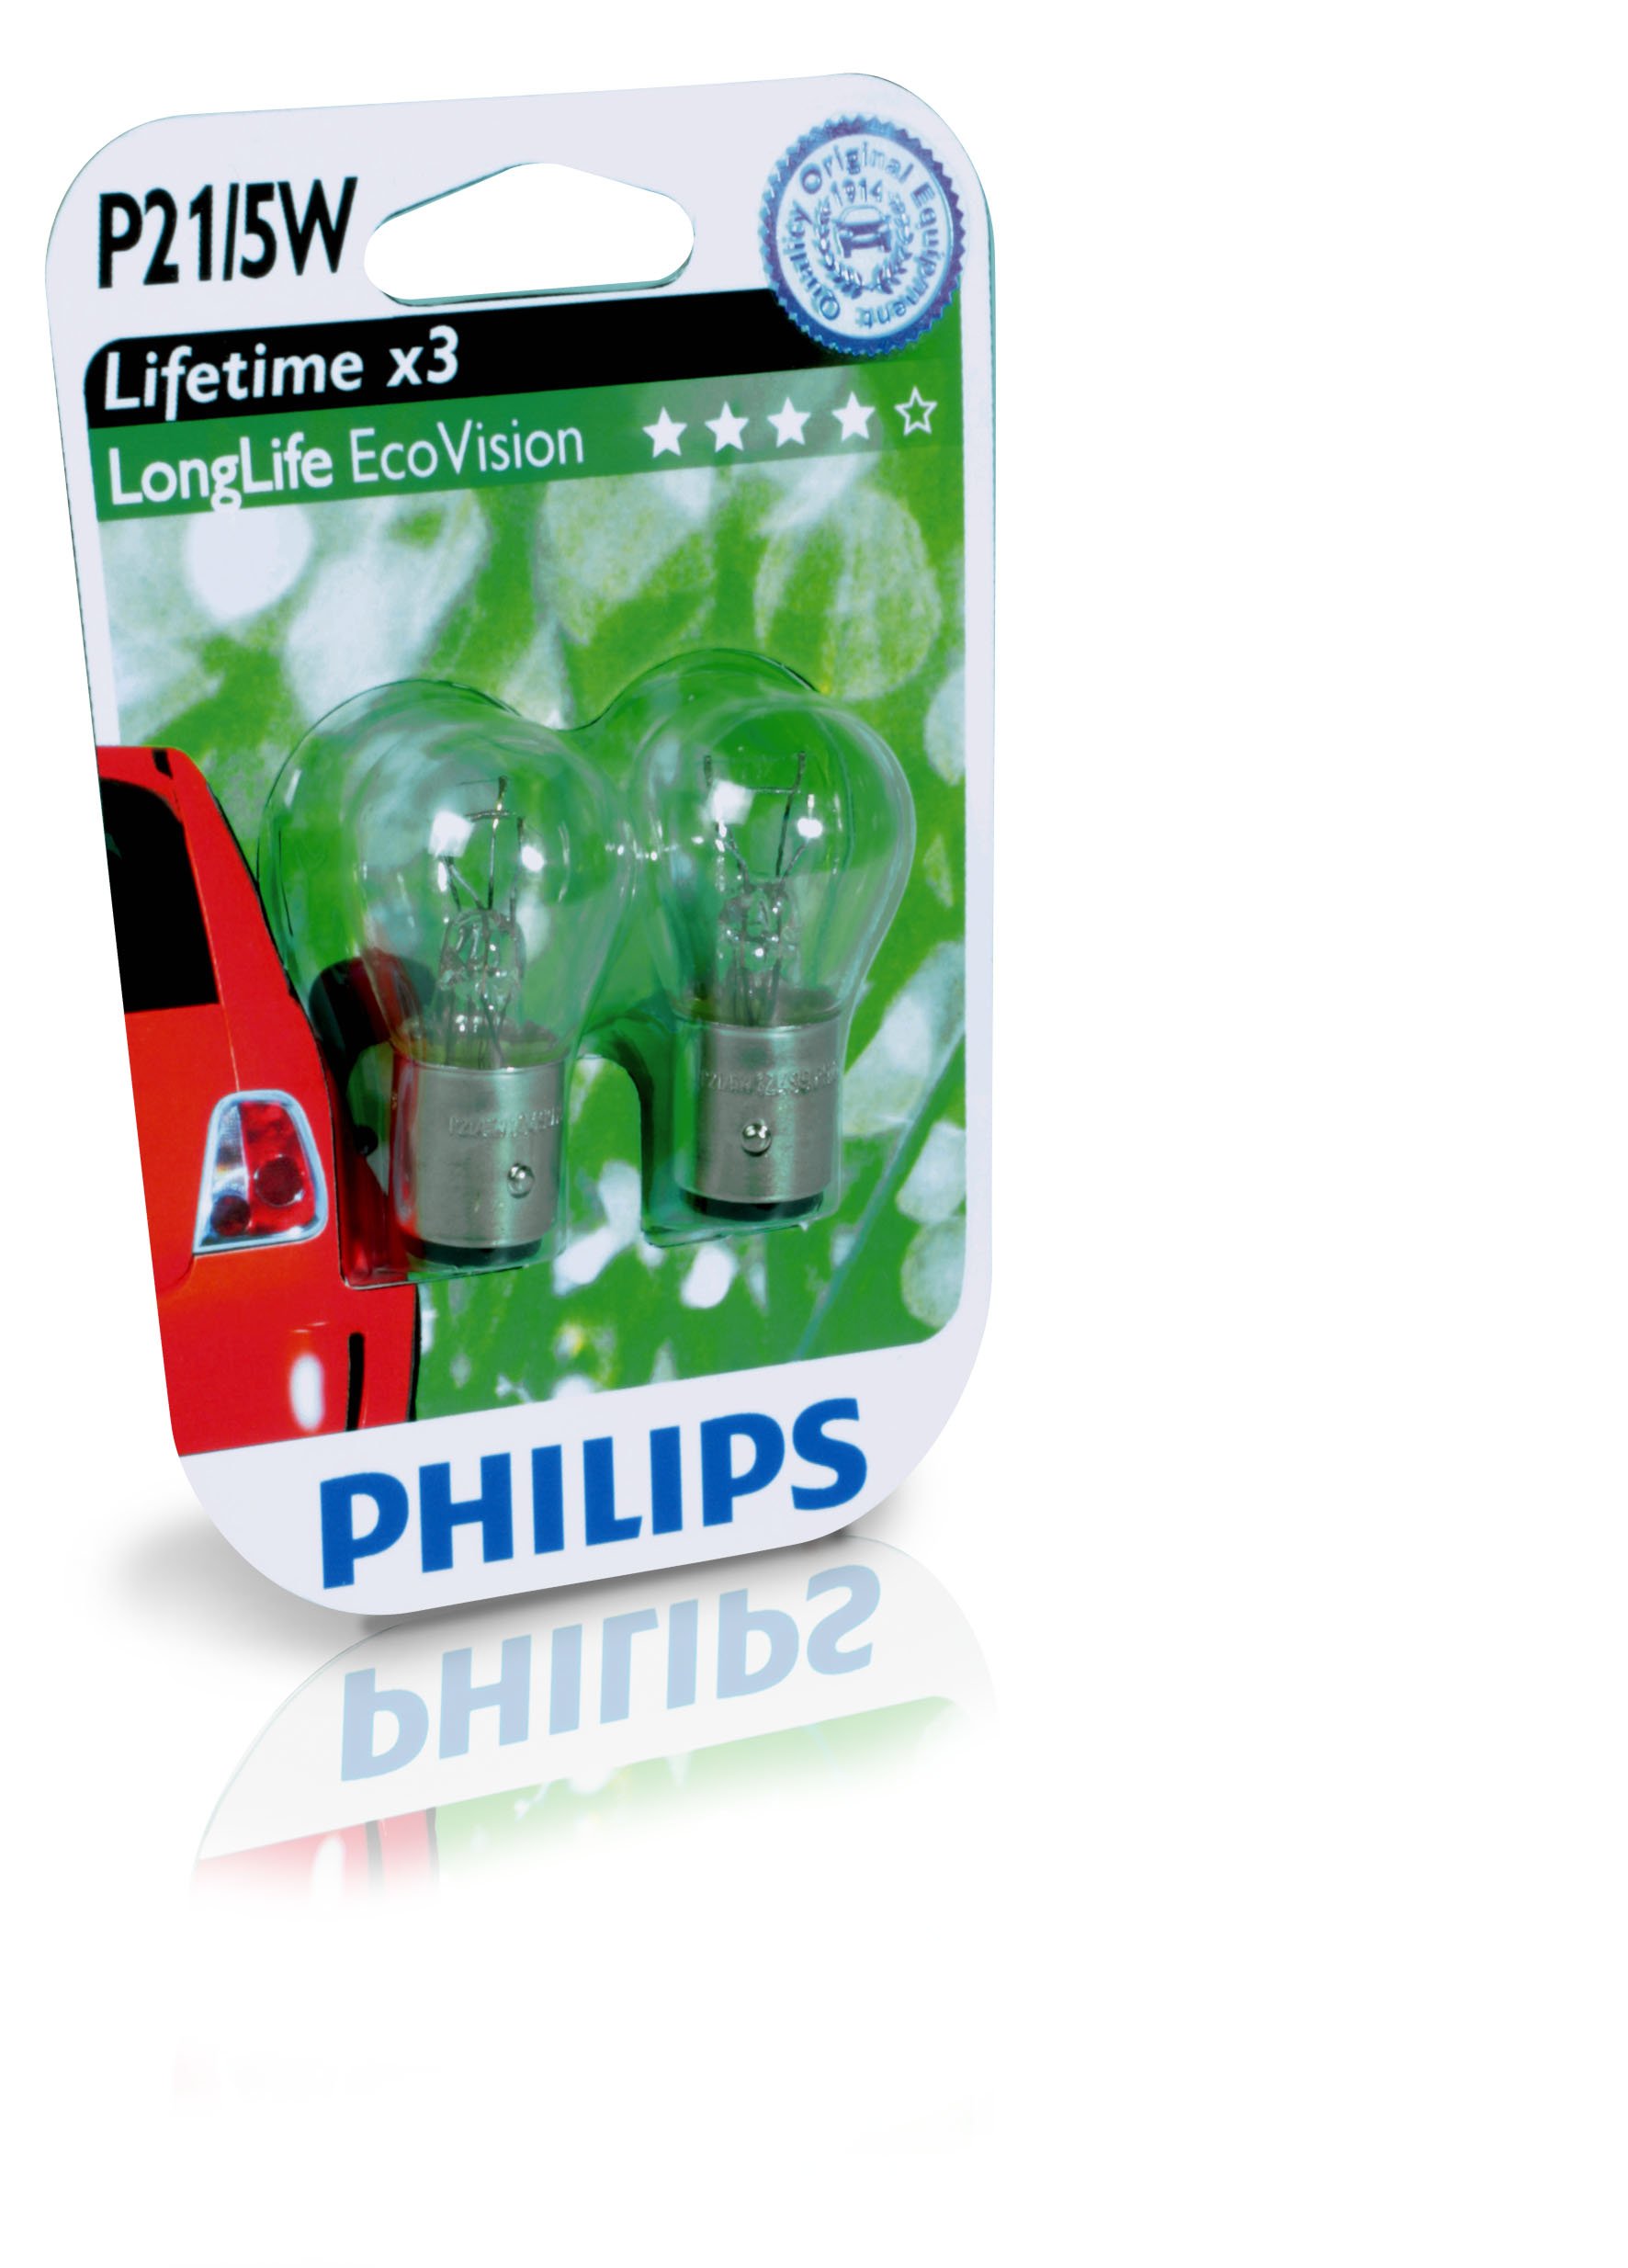 Philips 12499LLECOB2 LongLife EcoVision P21/5W Signallampe 12499LLECOB2, 2er Blister von Philips automotive lighting